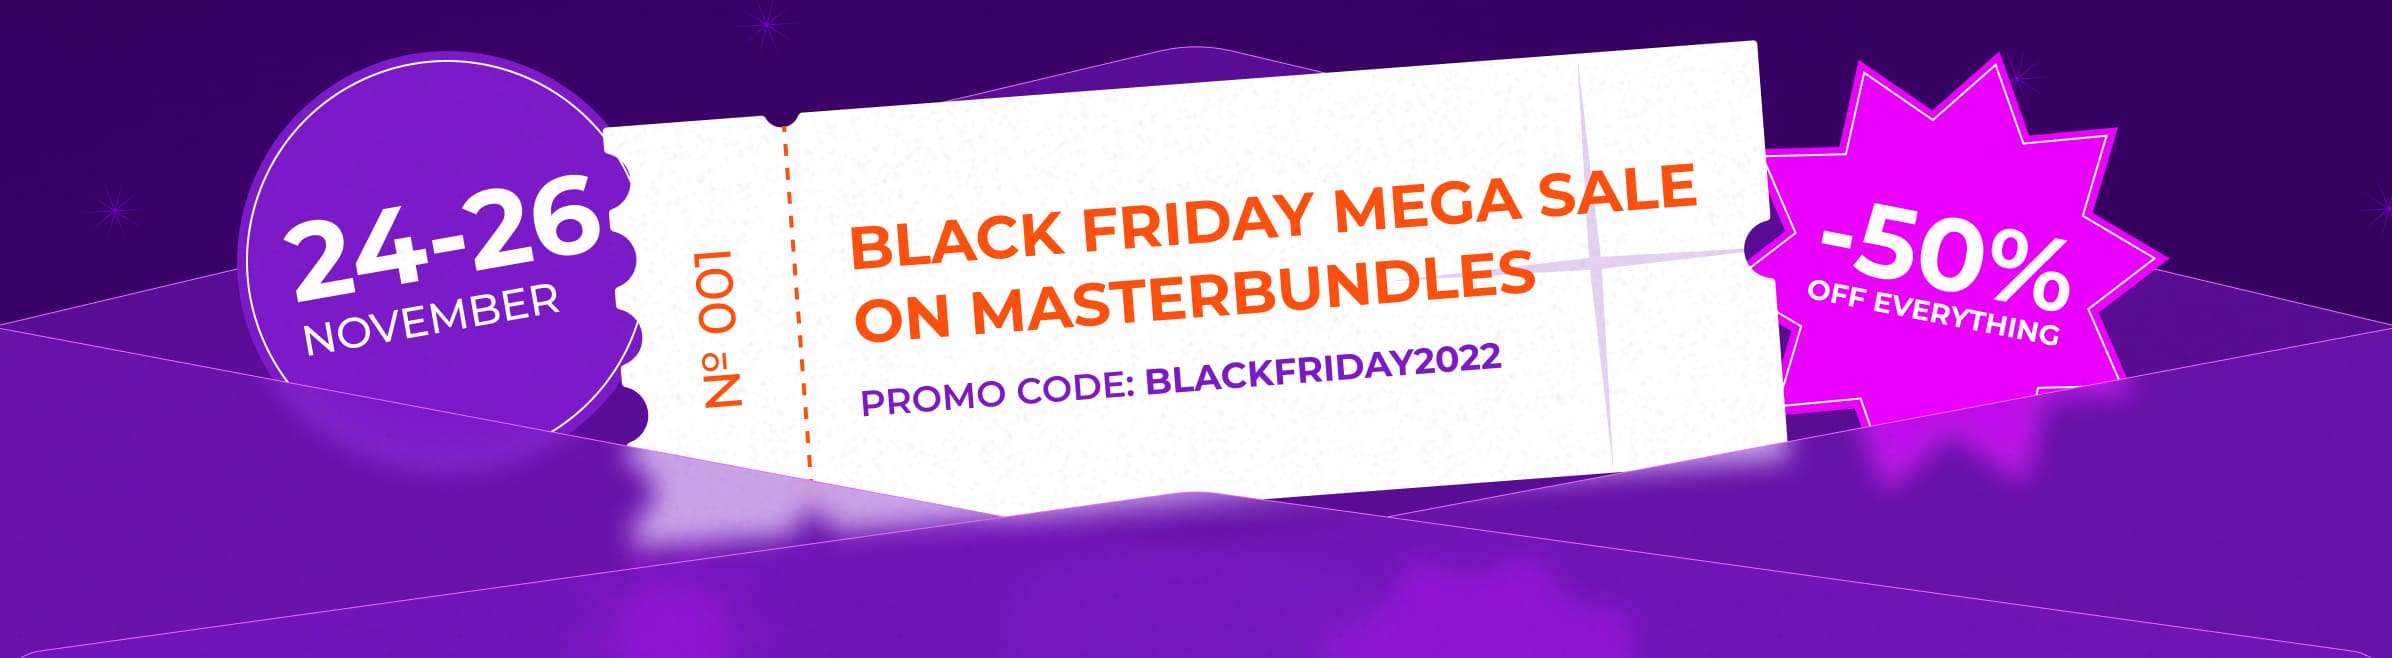 Black Friday discount codes 2022 #blackfridaydeals #cybermonday #shopp